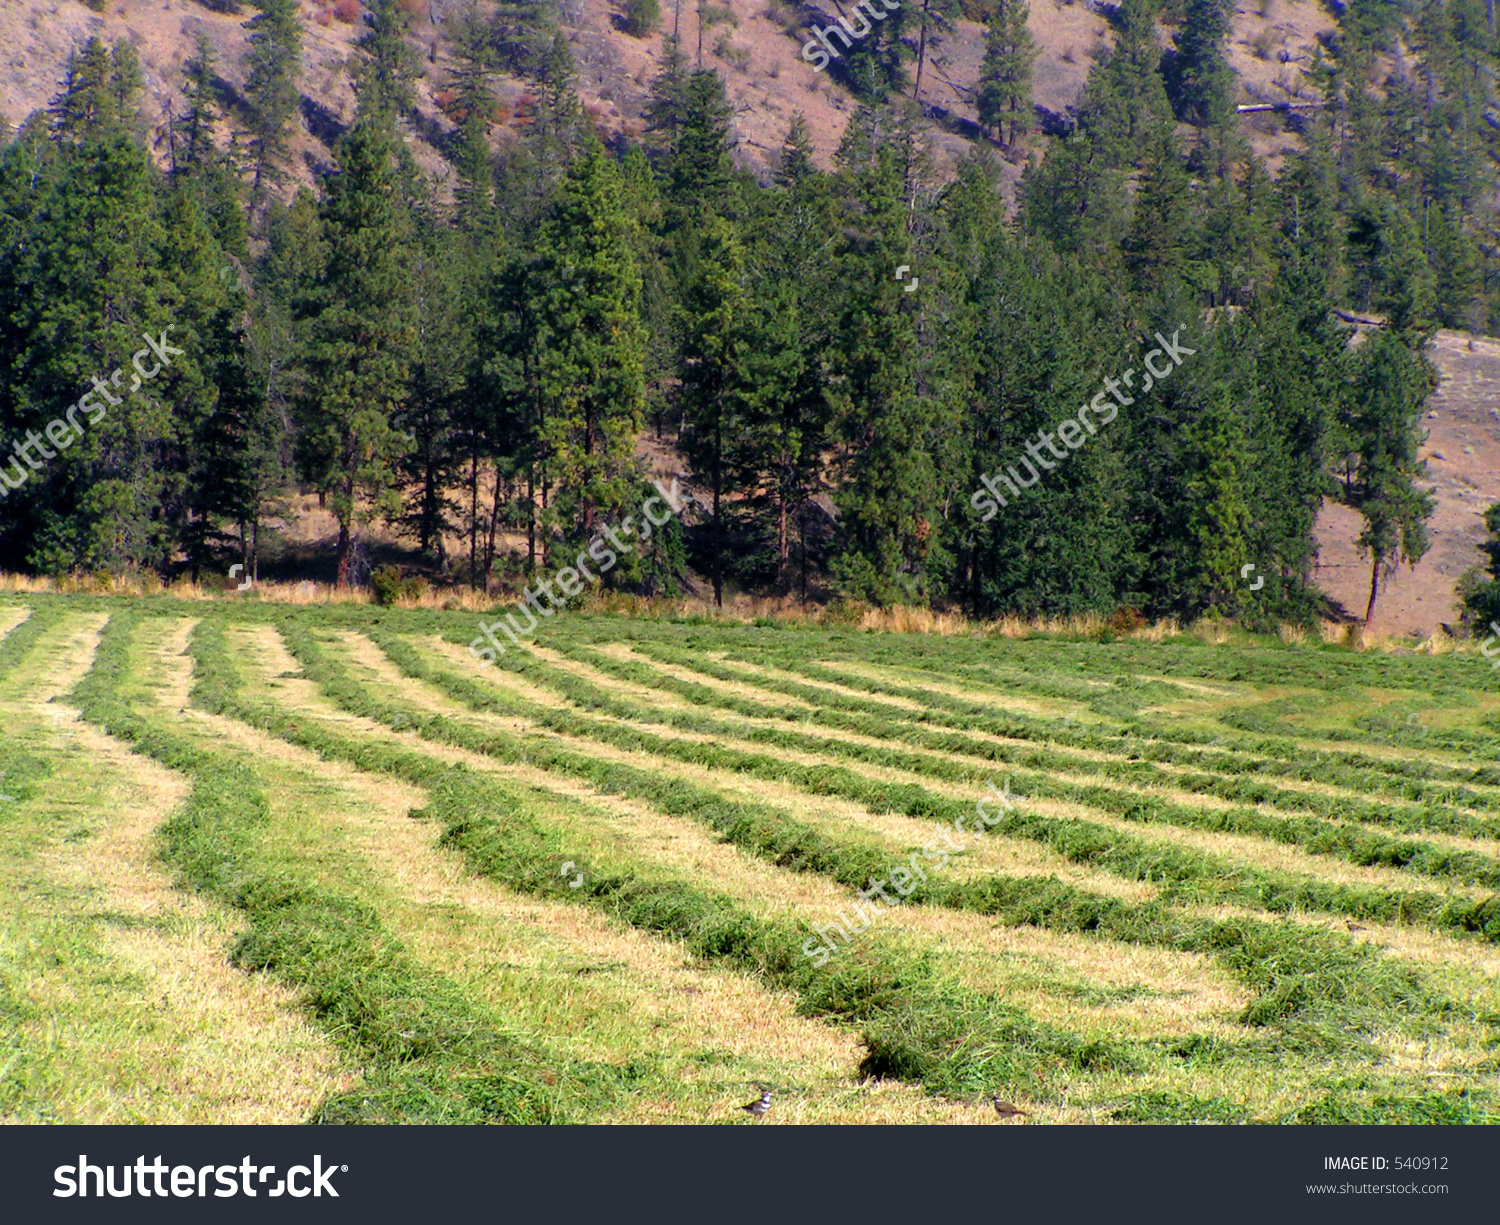 Swaths Of Alfalfa Hay Stock Photo 540912 : Shutterstock.